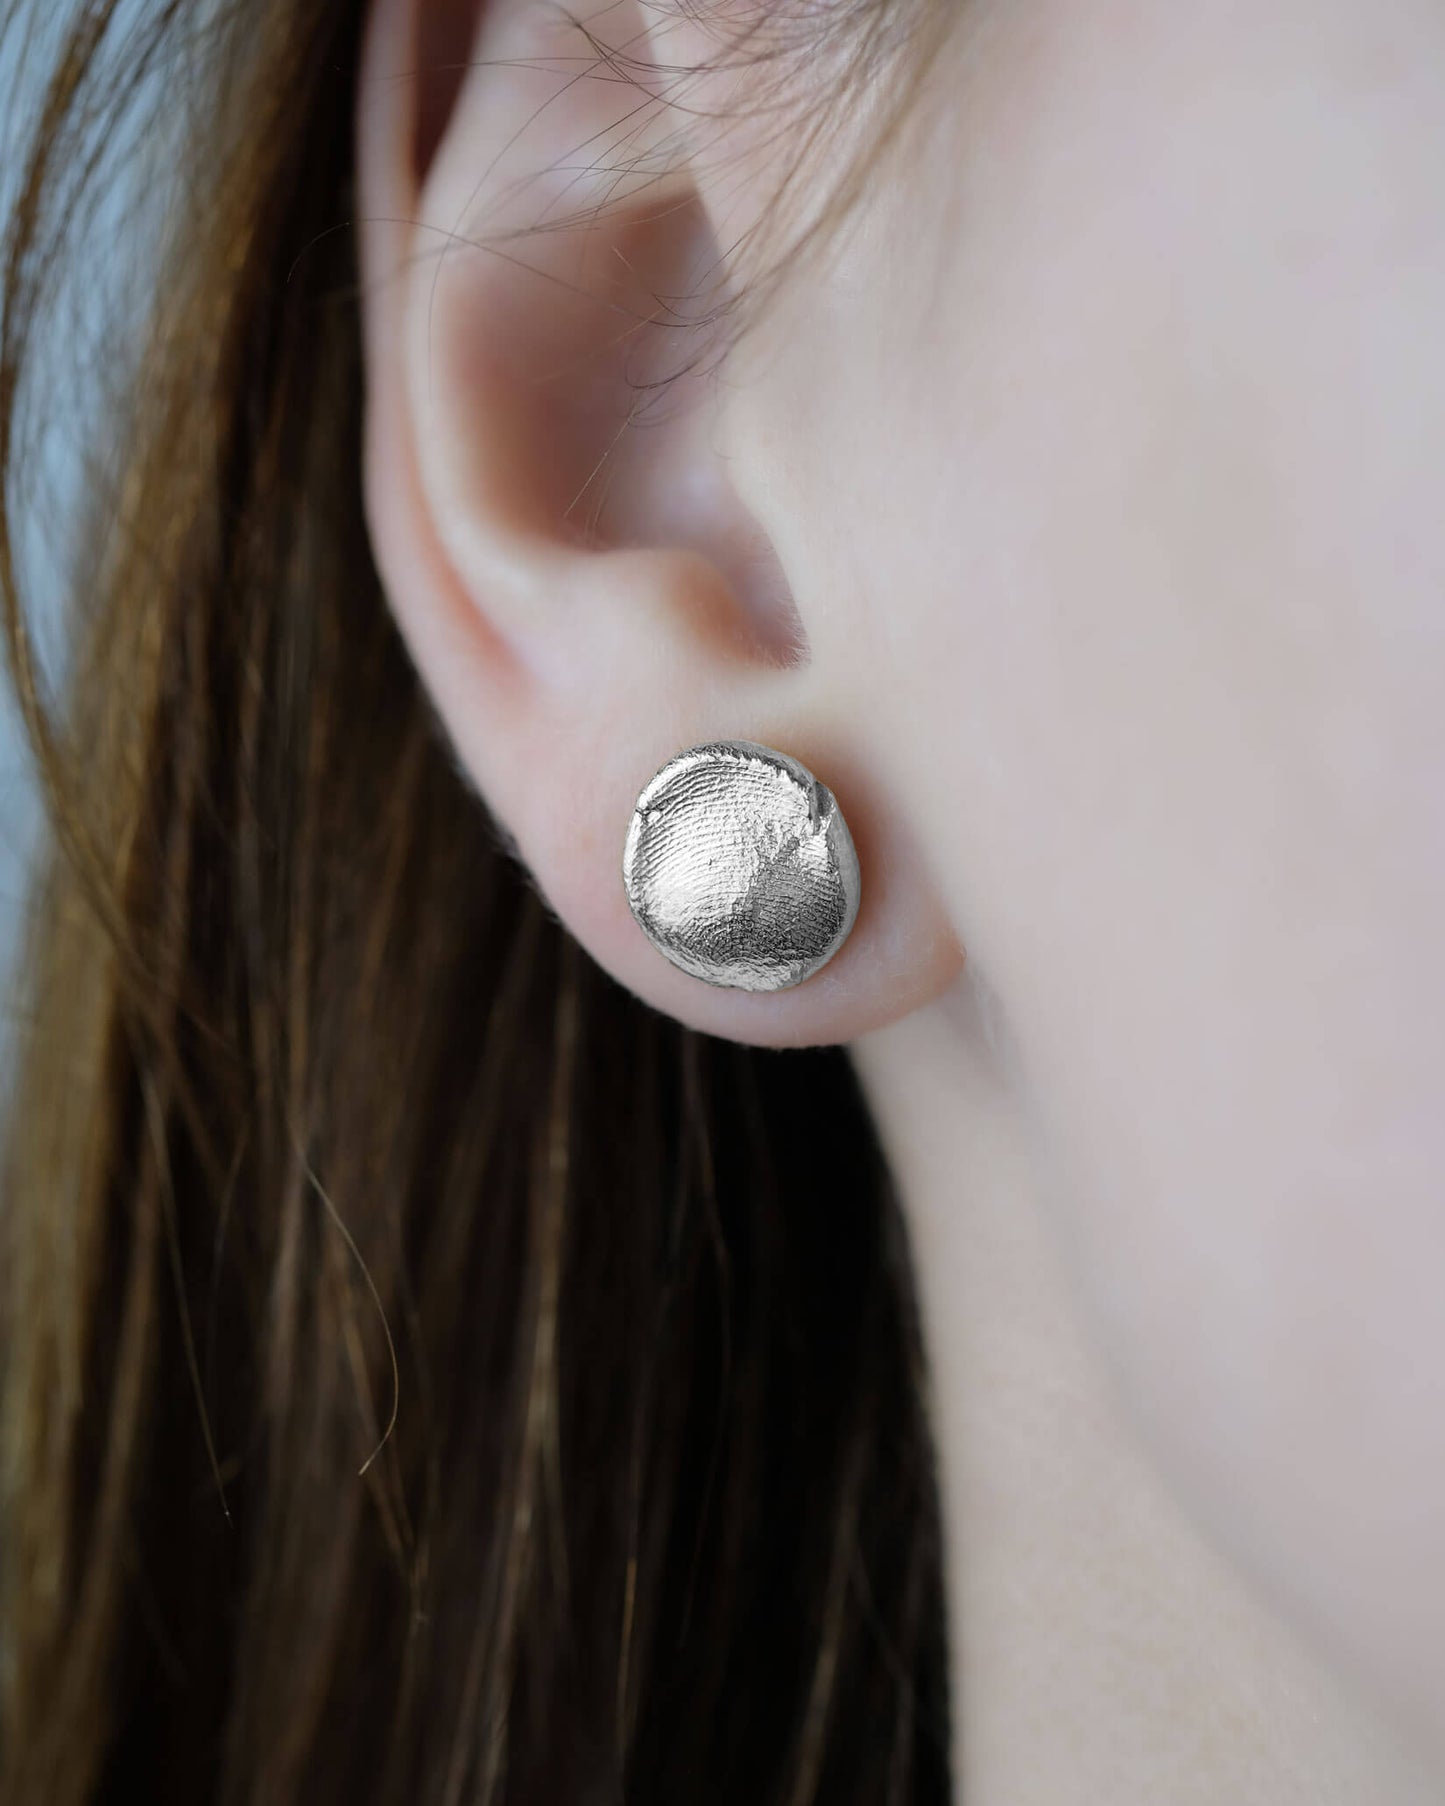 Baby Fingerprints Earrings in sterling silver by Matanai Jewelry